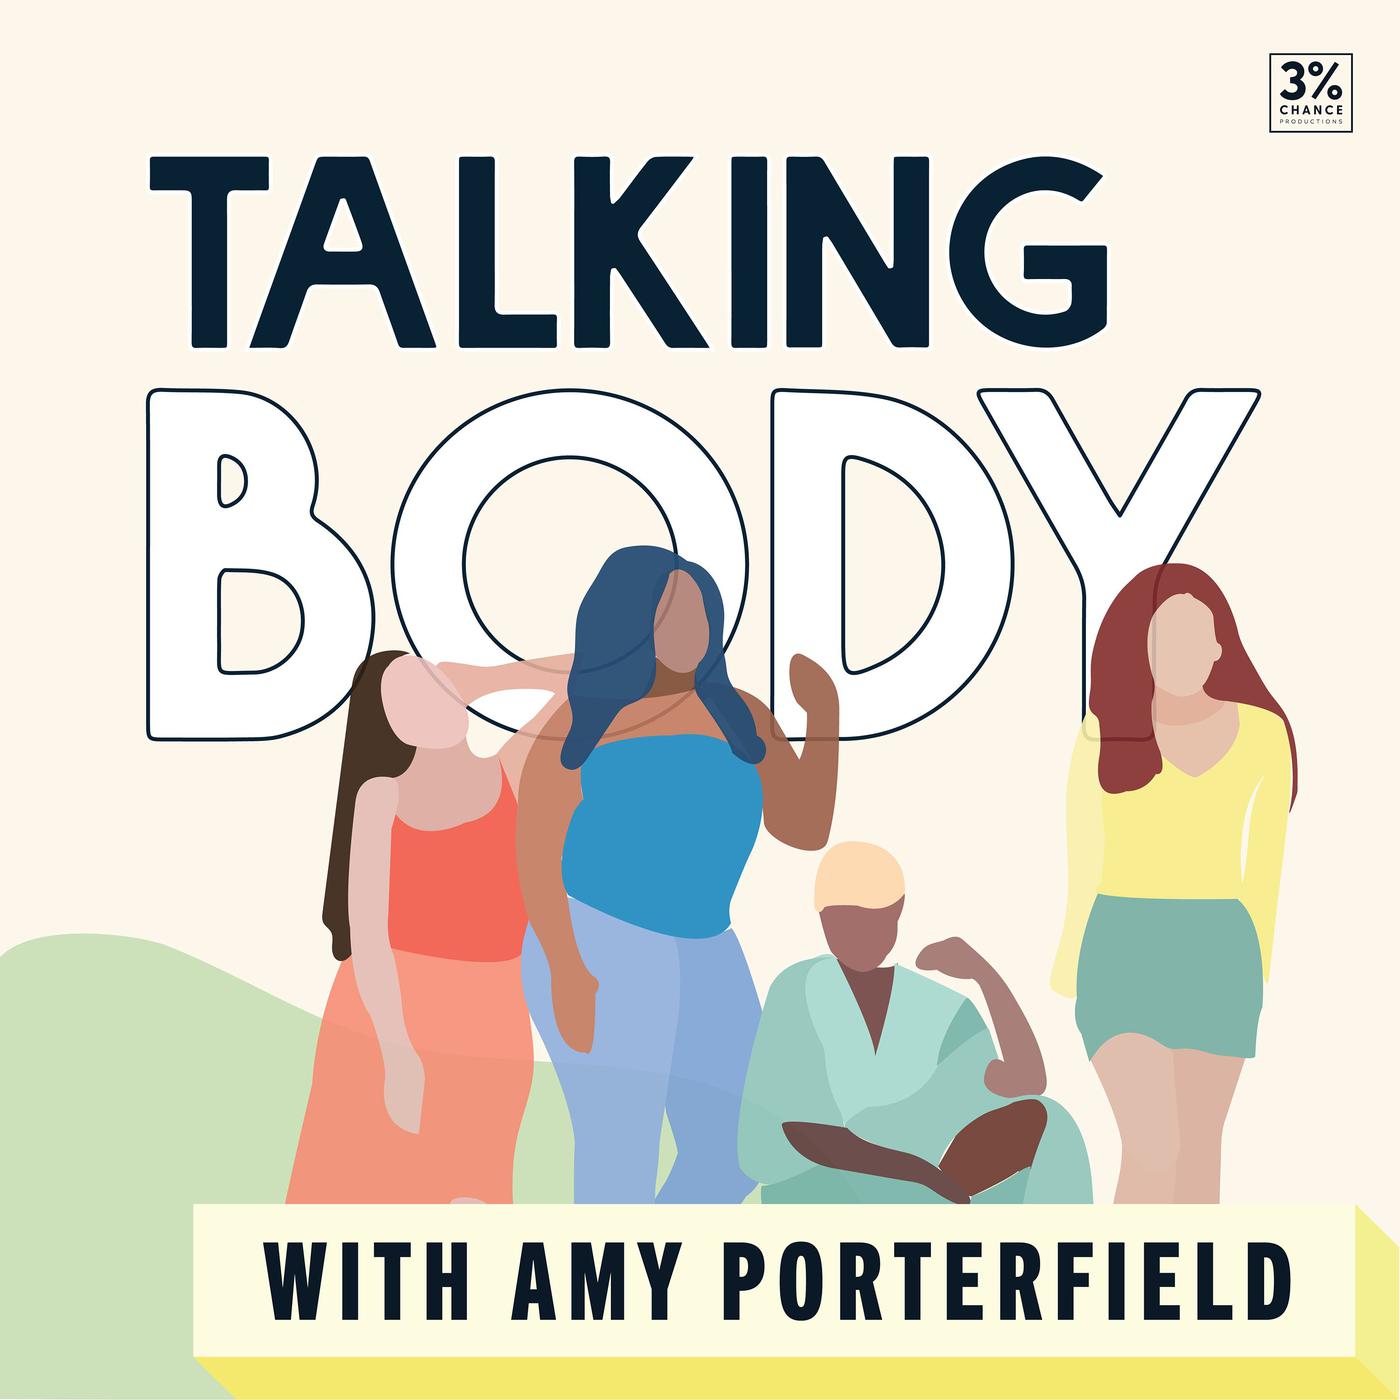 Talking body with amy porterfield.